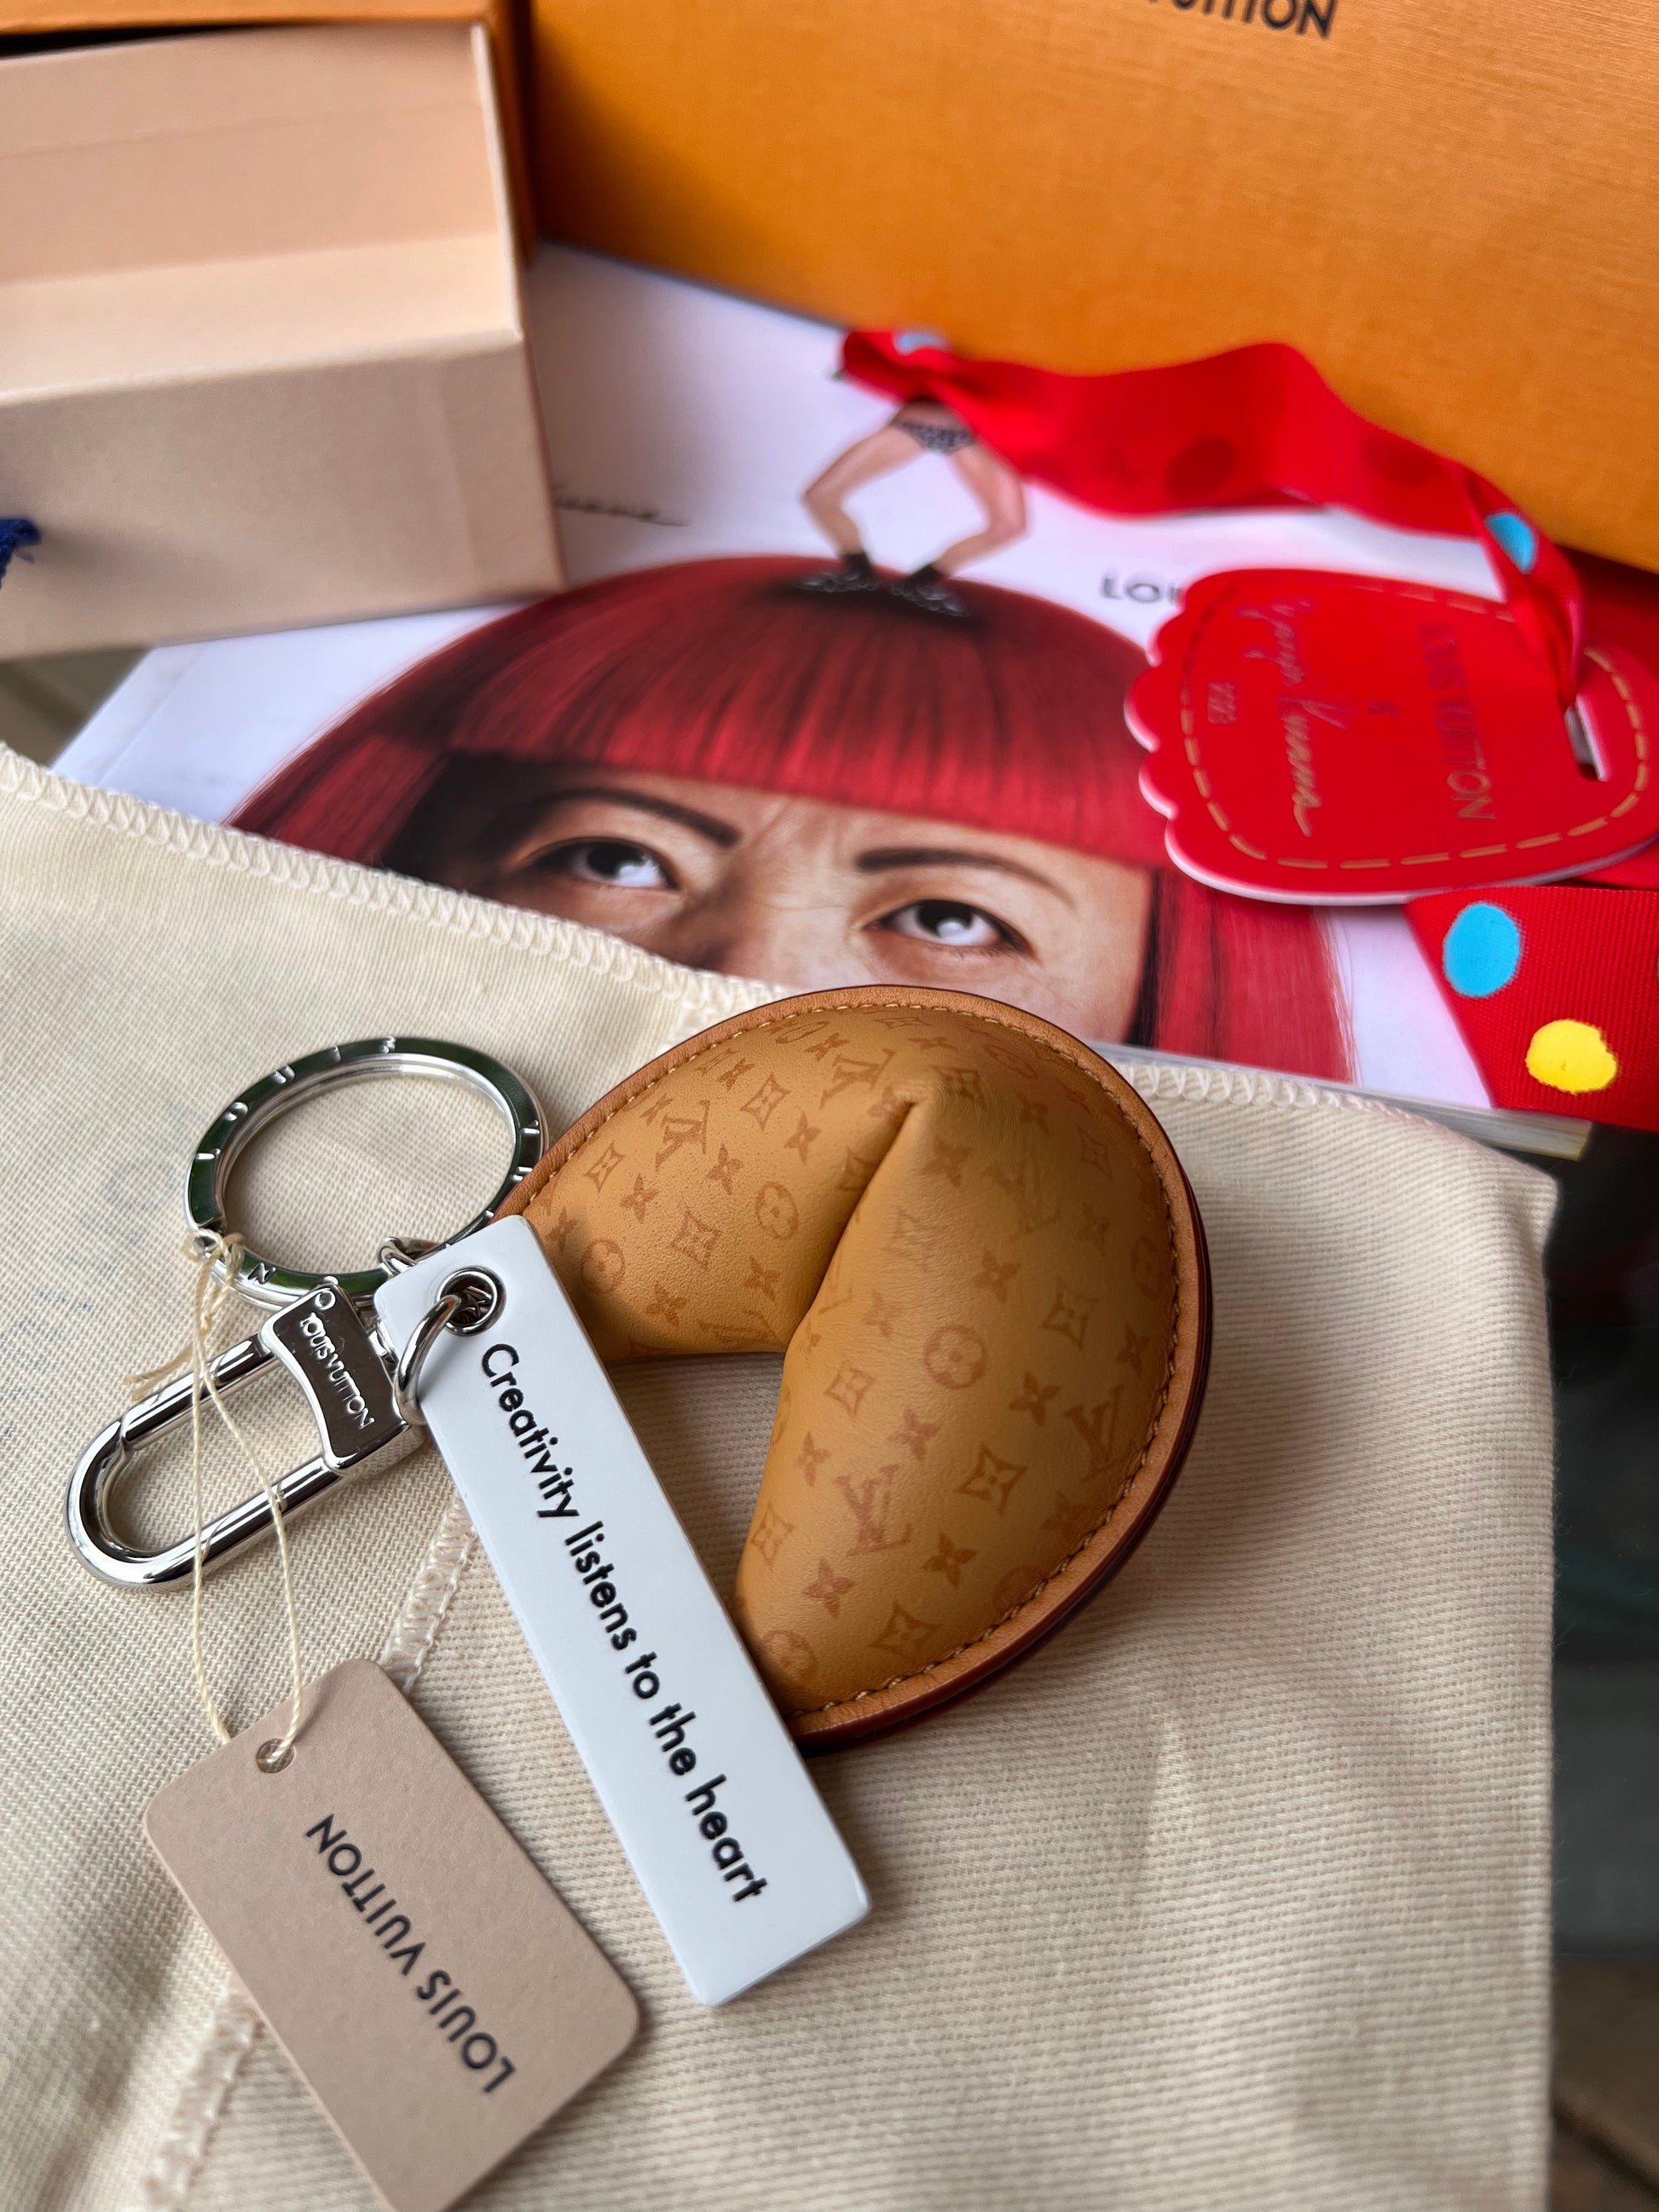 Louis Vuitton lv key pouch with orange chain  Lv wallet on chain, Louis  vuitton, Louis vuitton bag